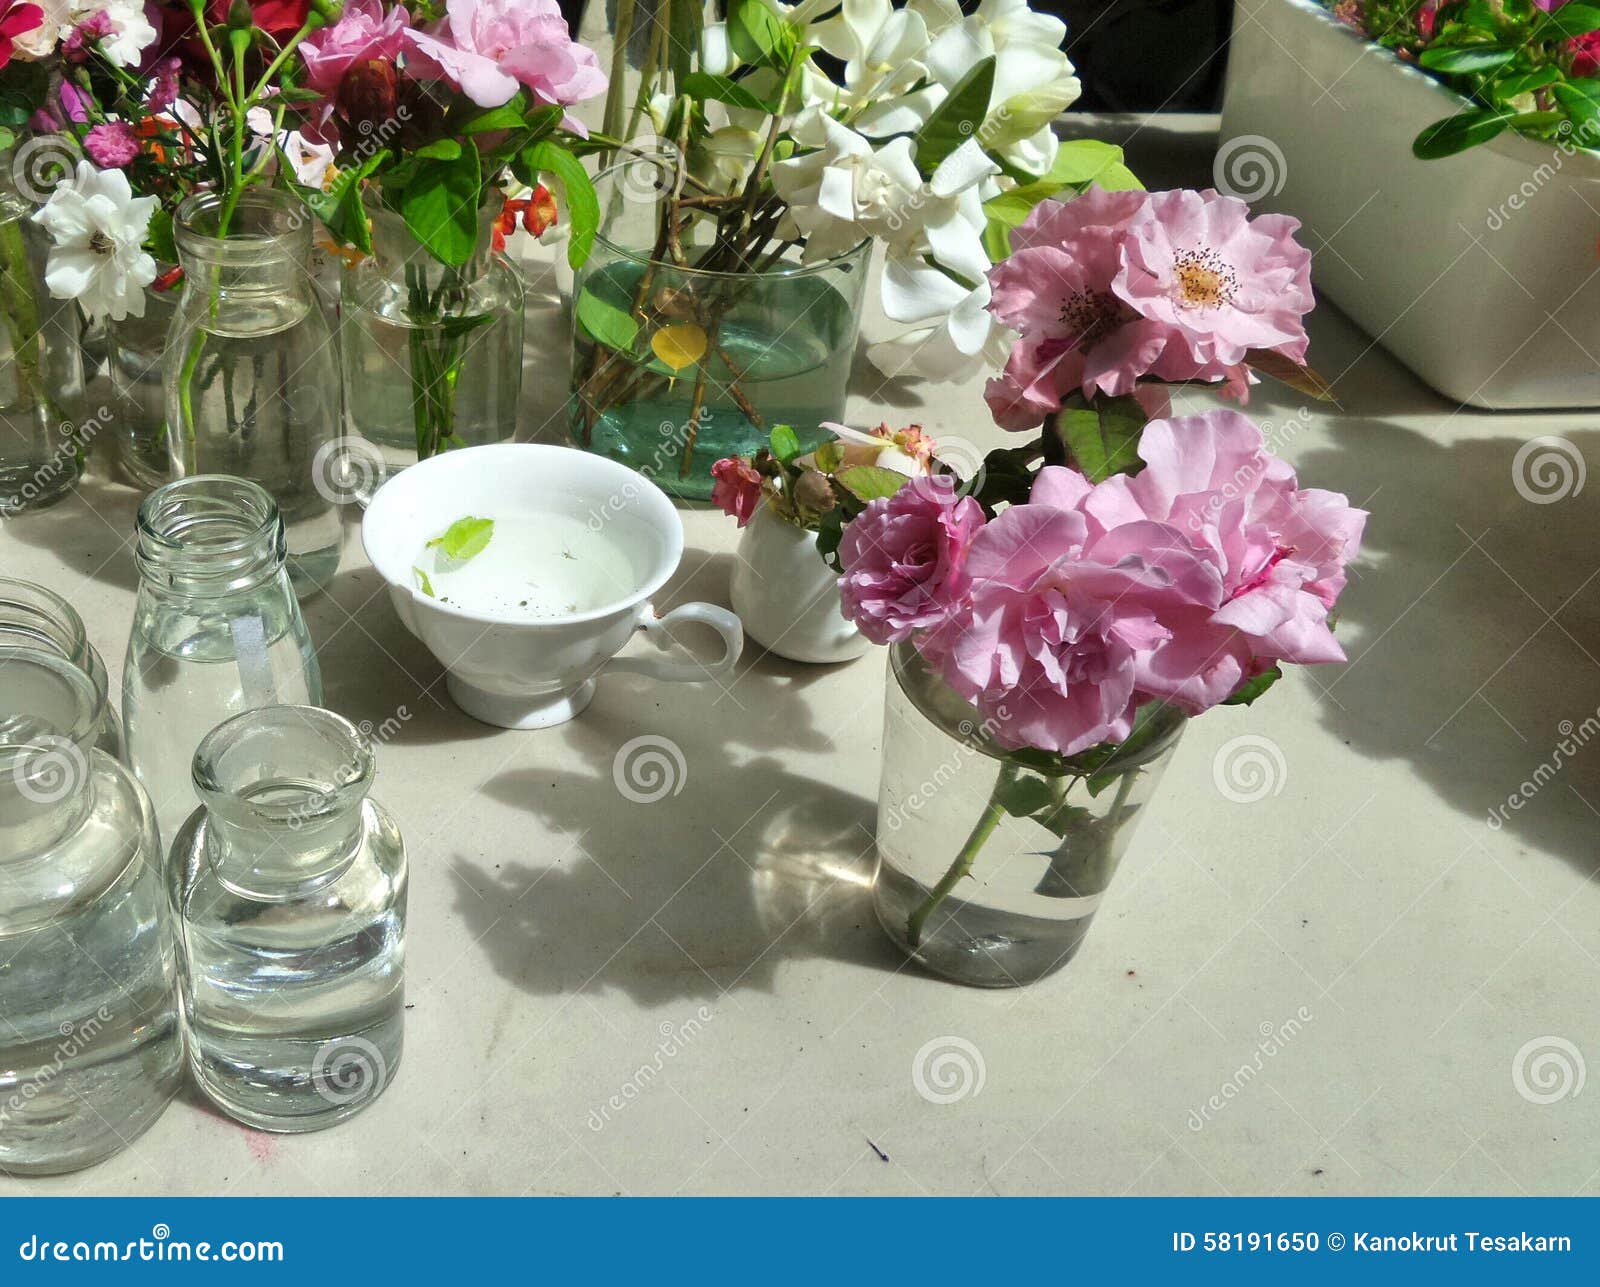 How to arrange glass of garden flowers